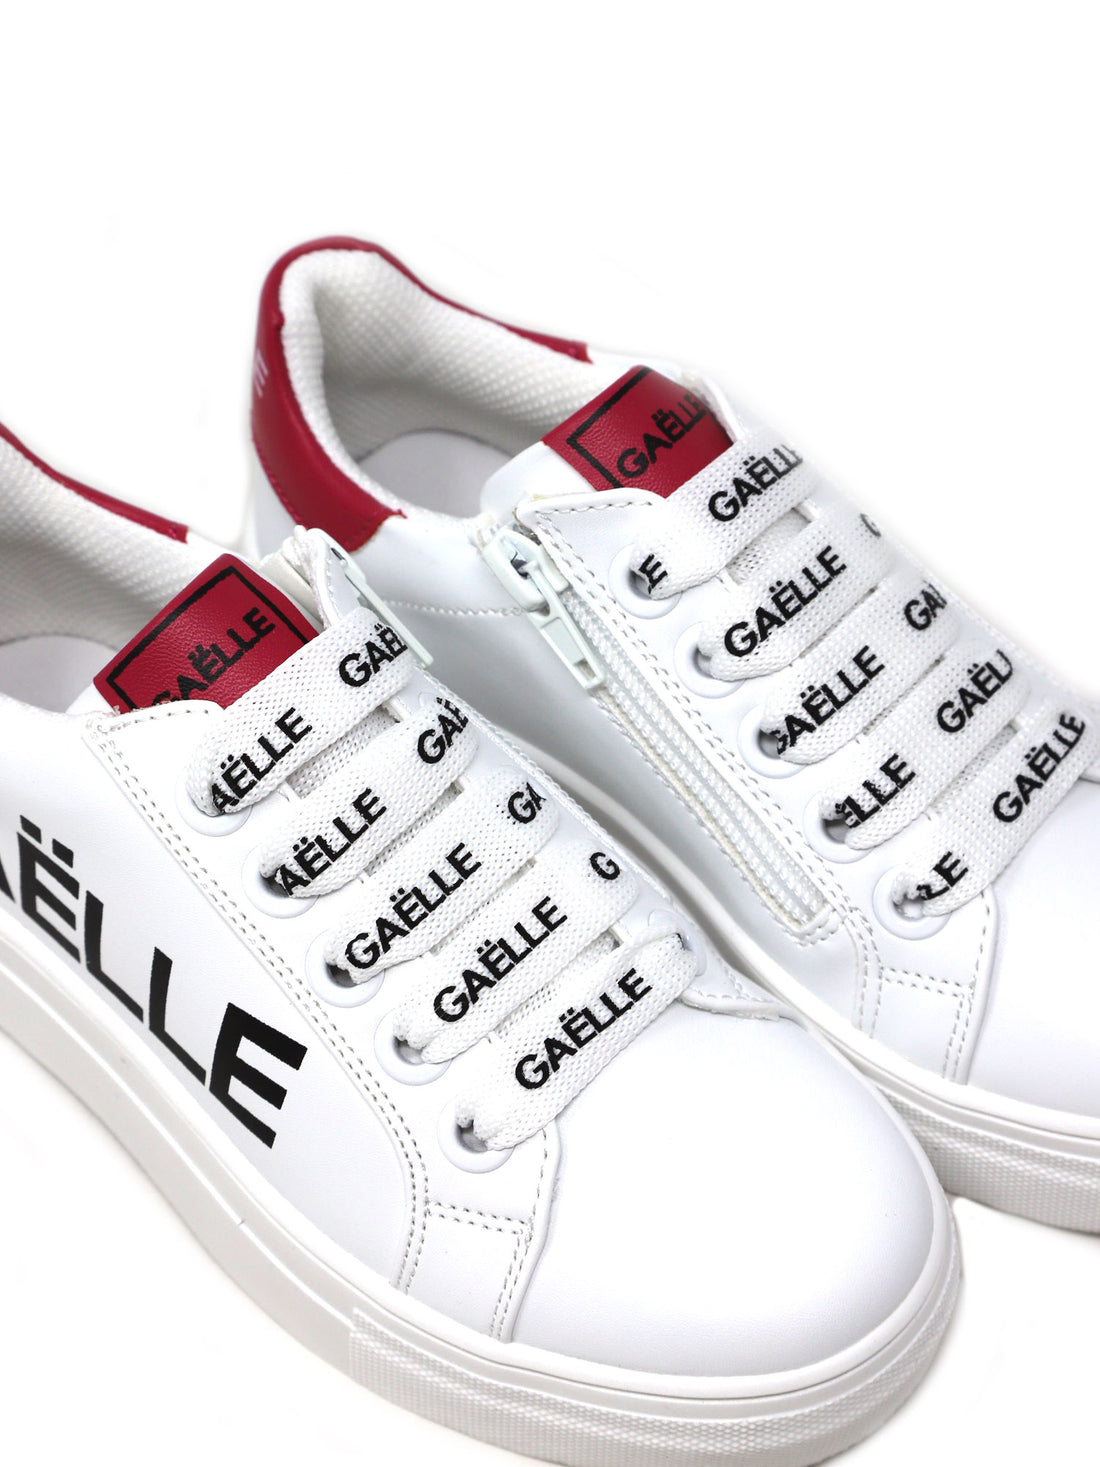 Sneakers Bianco Fucsia Gaelle